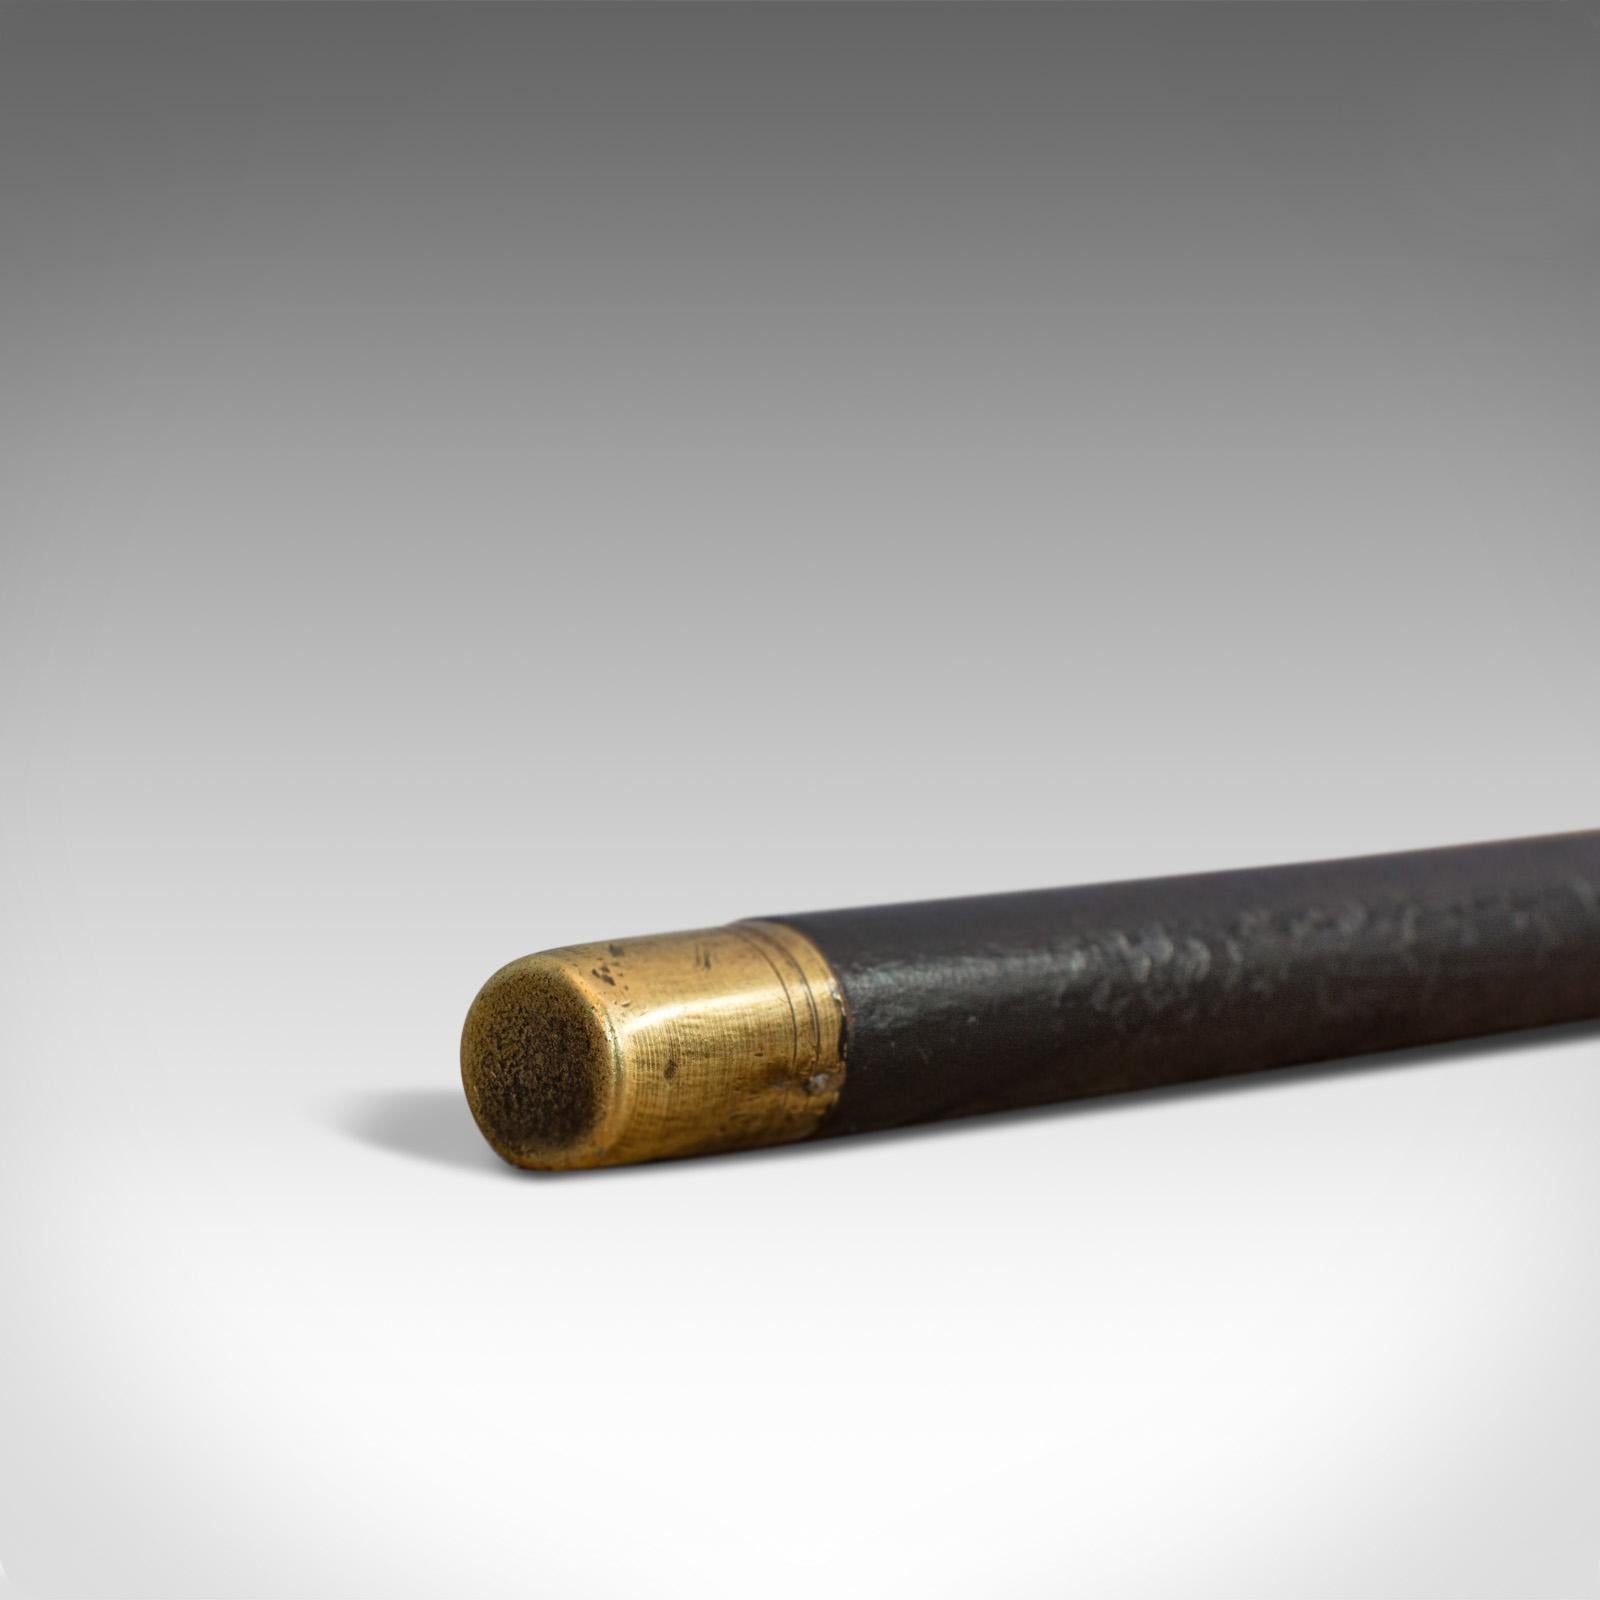 20th Century Antique Gadget Cane, English, Mahogany, Brass, Walking Stick, Edwardian